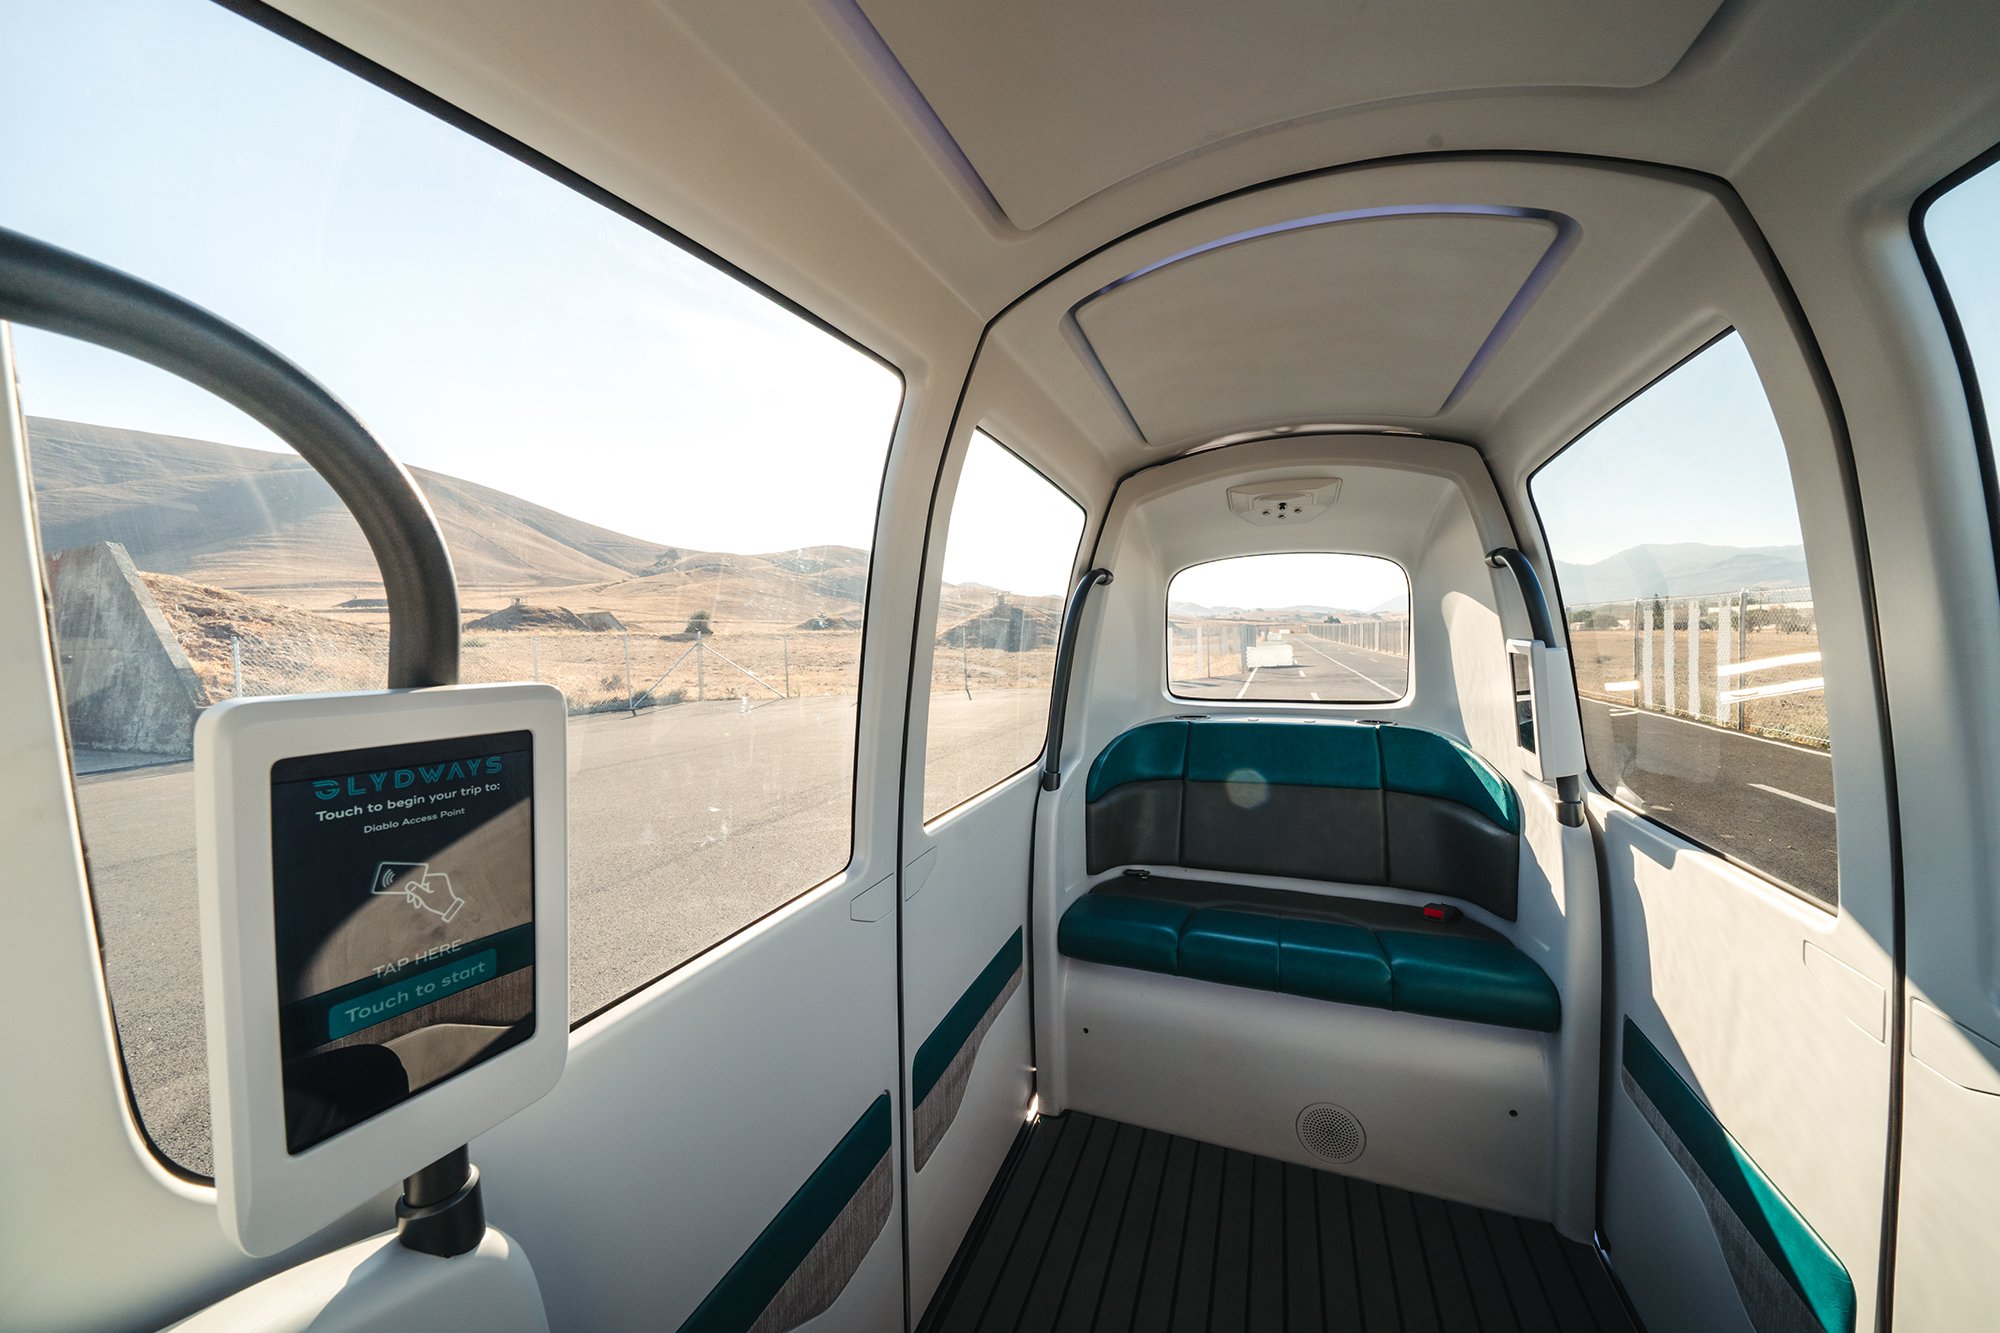 The interior design of Glydways autonomous vehicles